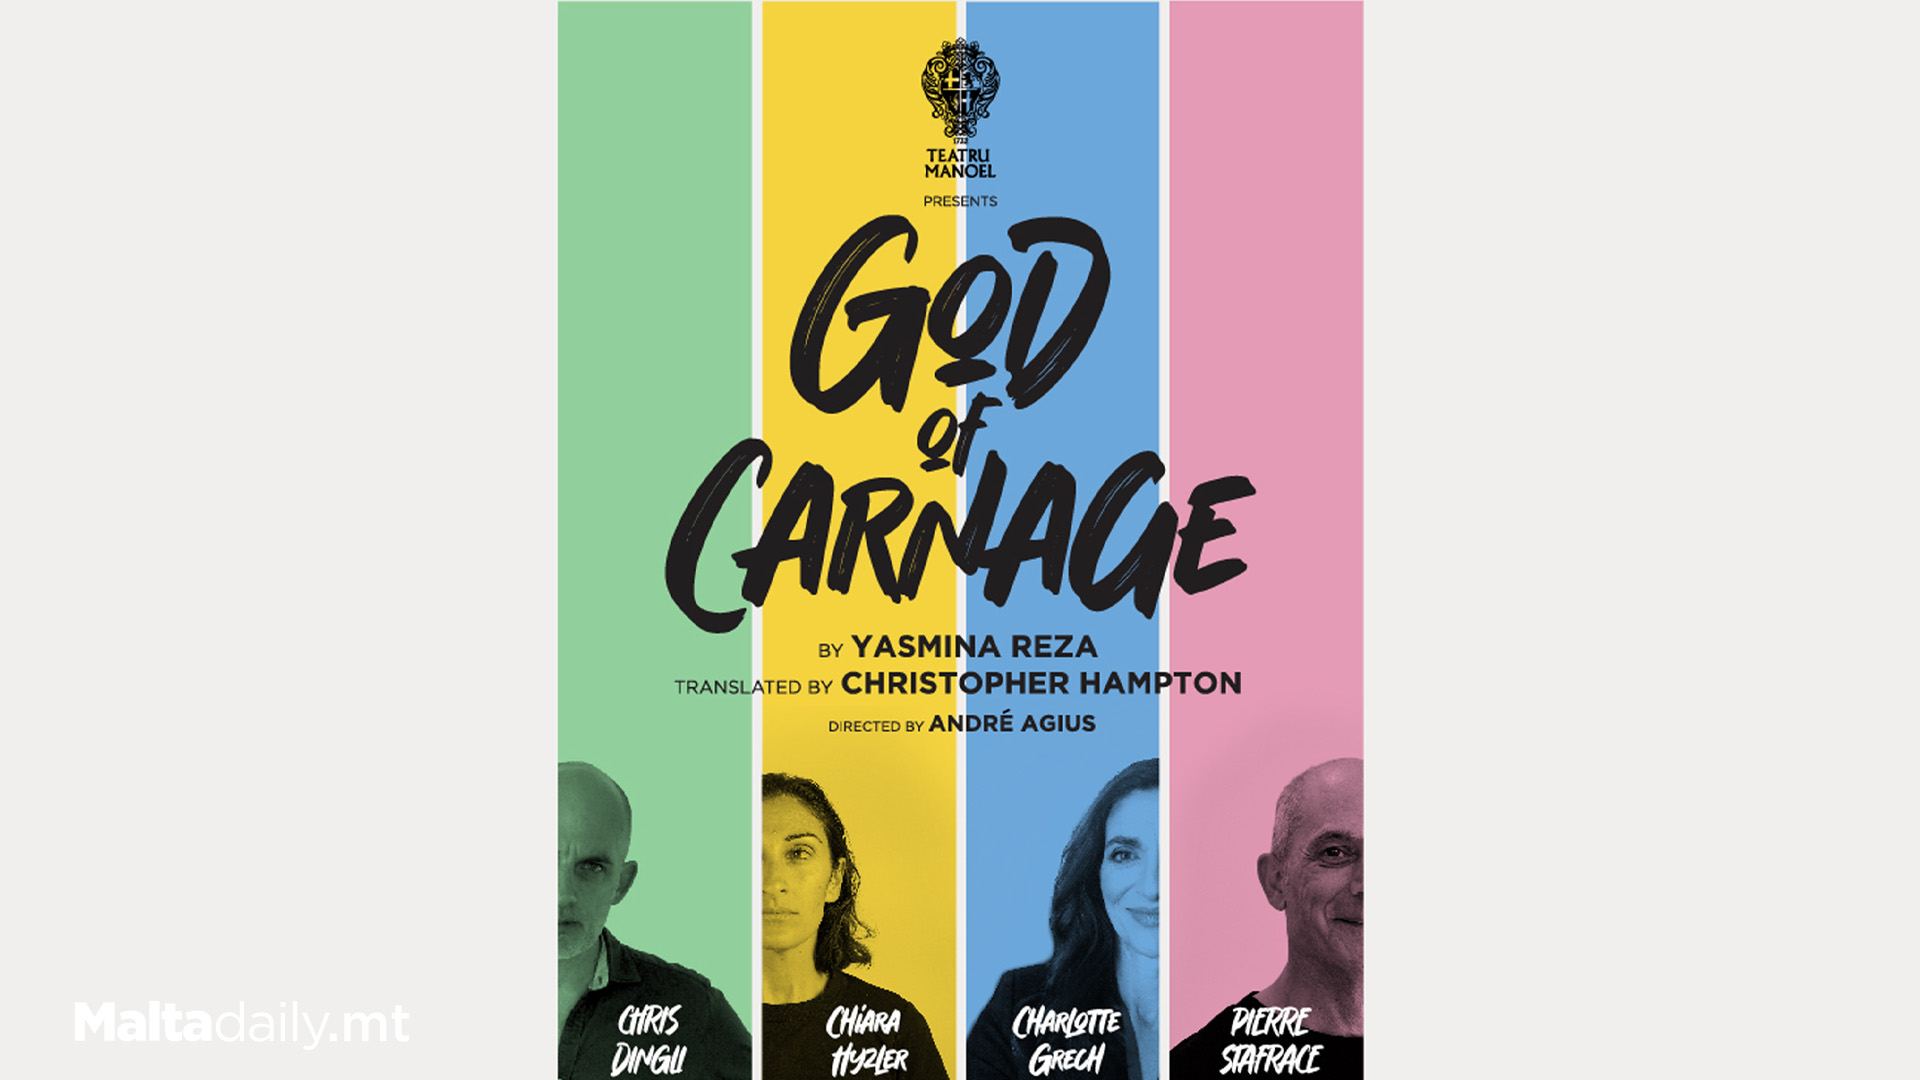 Teatru Manoel Announces Cast For New ‘God Of Carnage’ Production